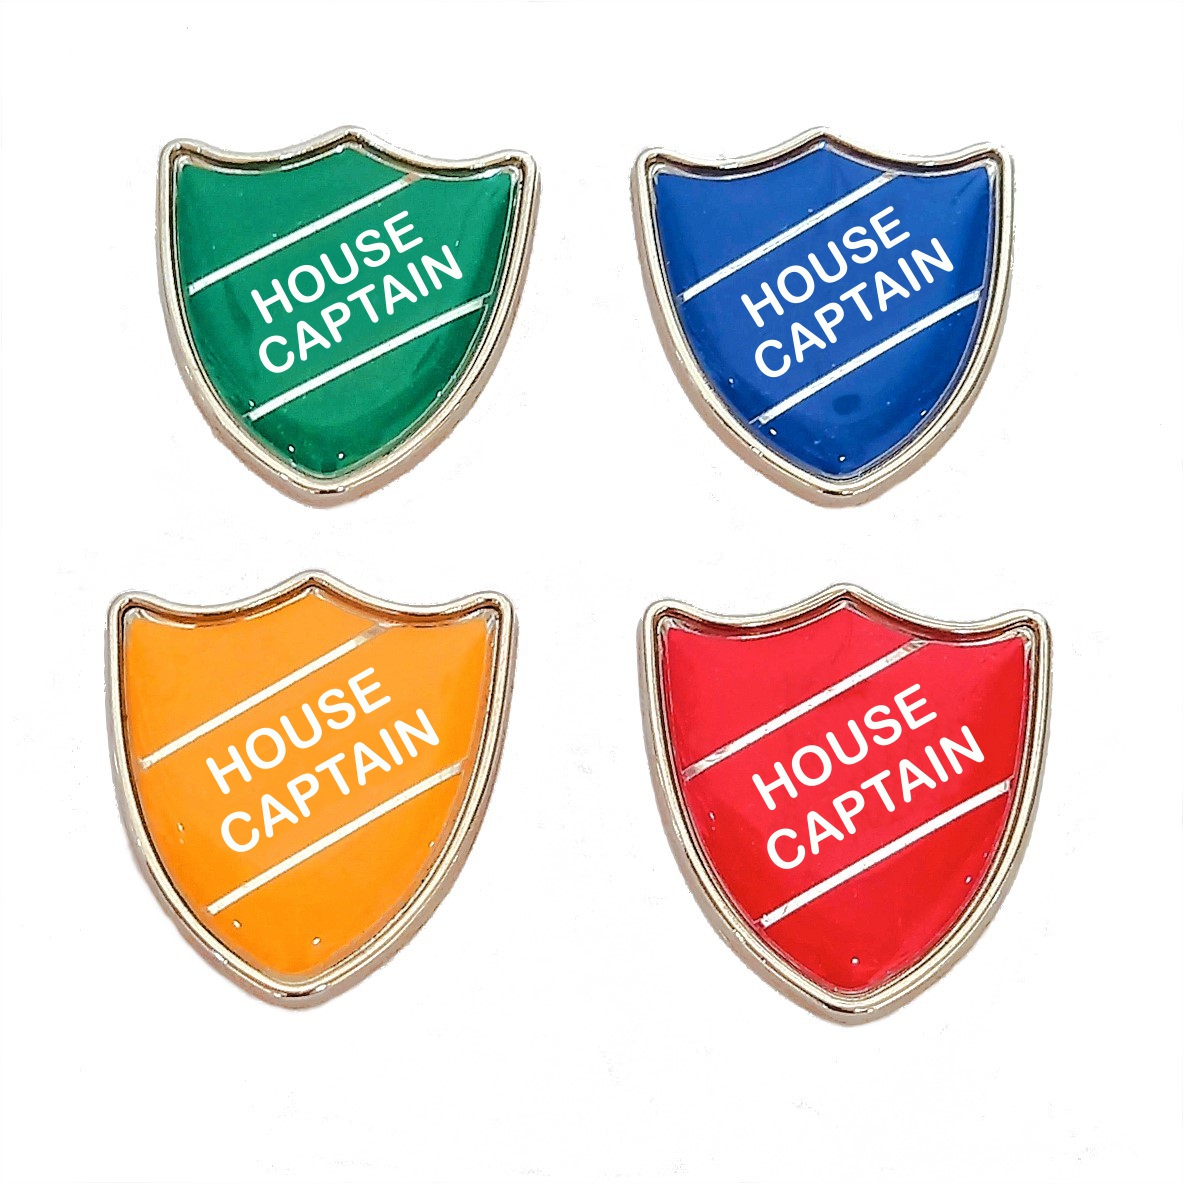 HOUSE CAPTAIN shield badge